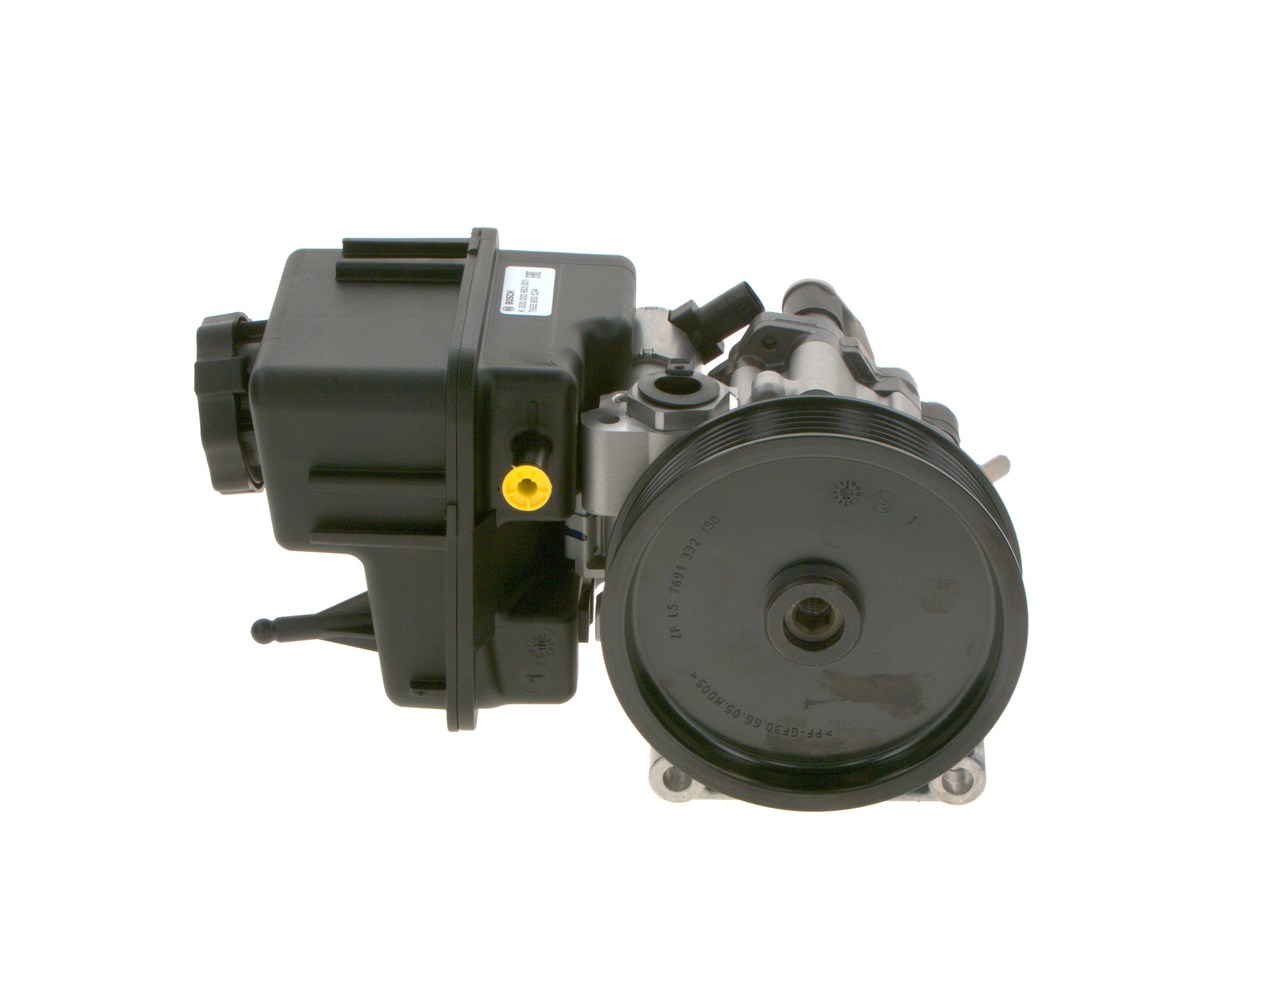 BOSCH K S00 000 663 Power steering pump Hydraulic, Pressure-limiting Valve, Vane Pump, Clockwise rotation